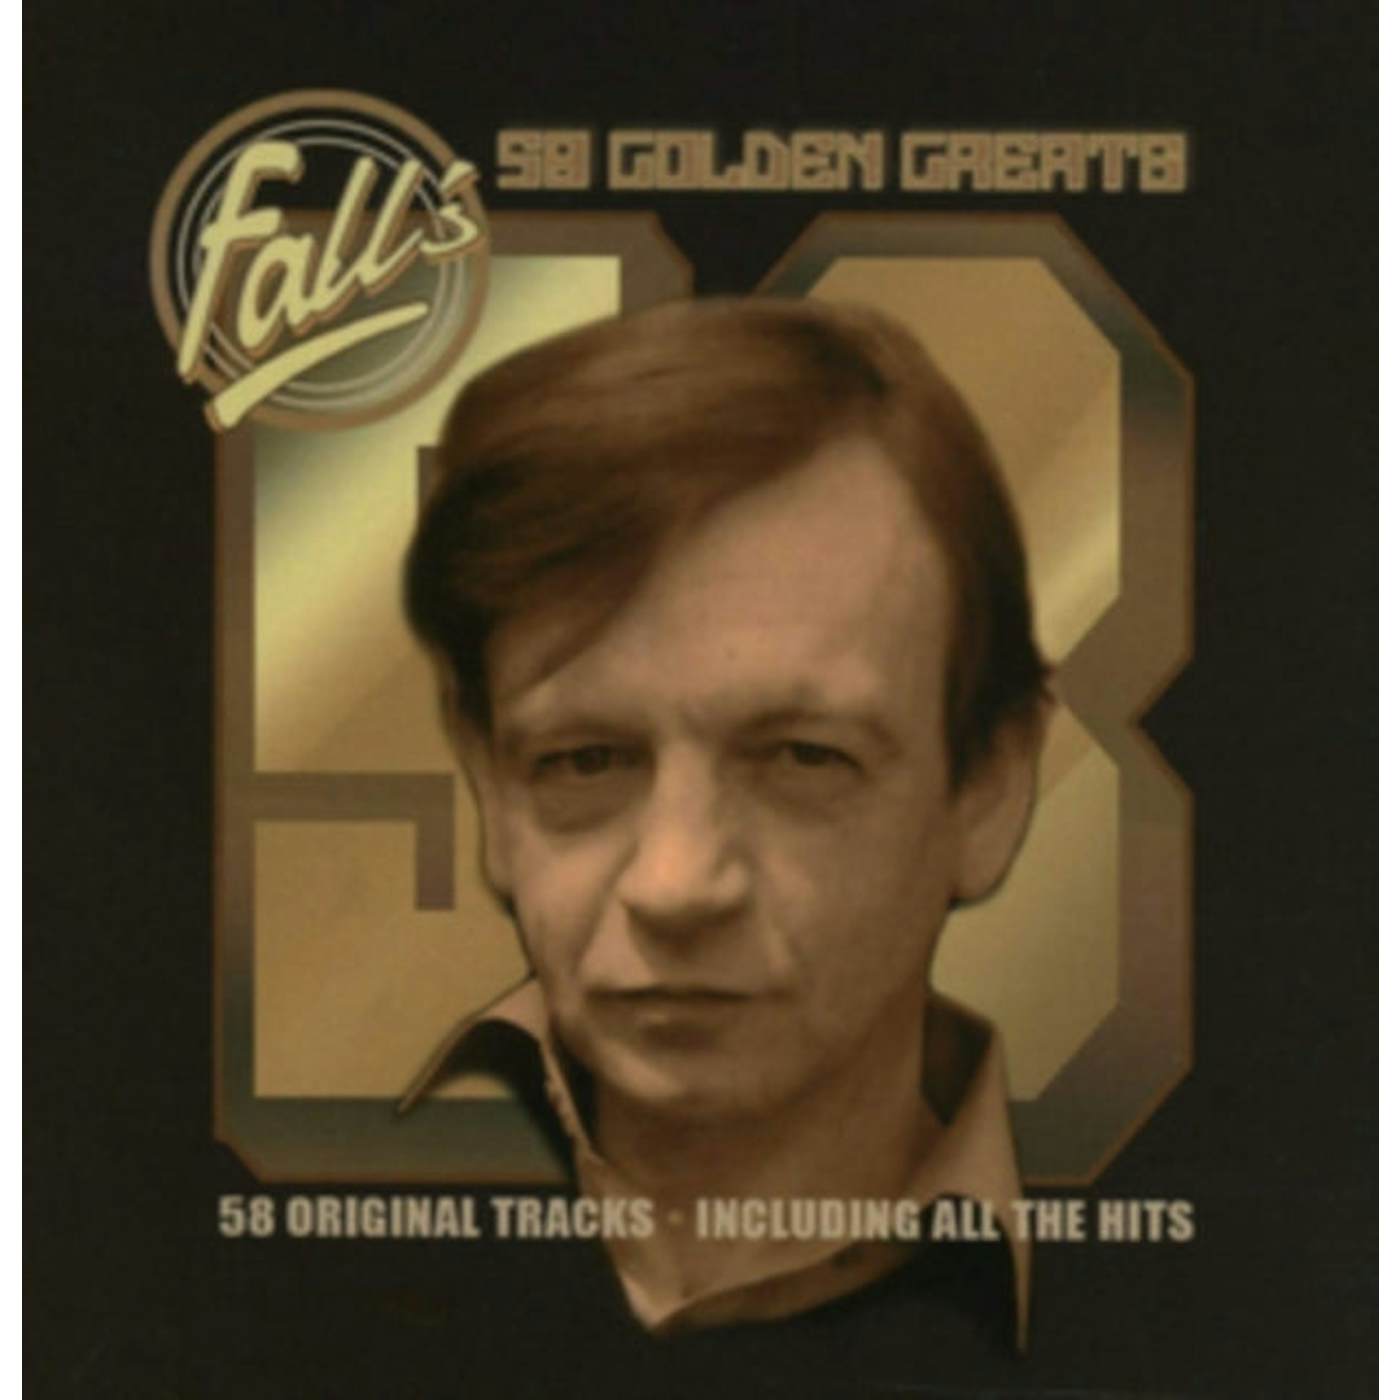 The Fall CD - 58 Golden Greats